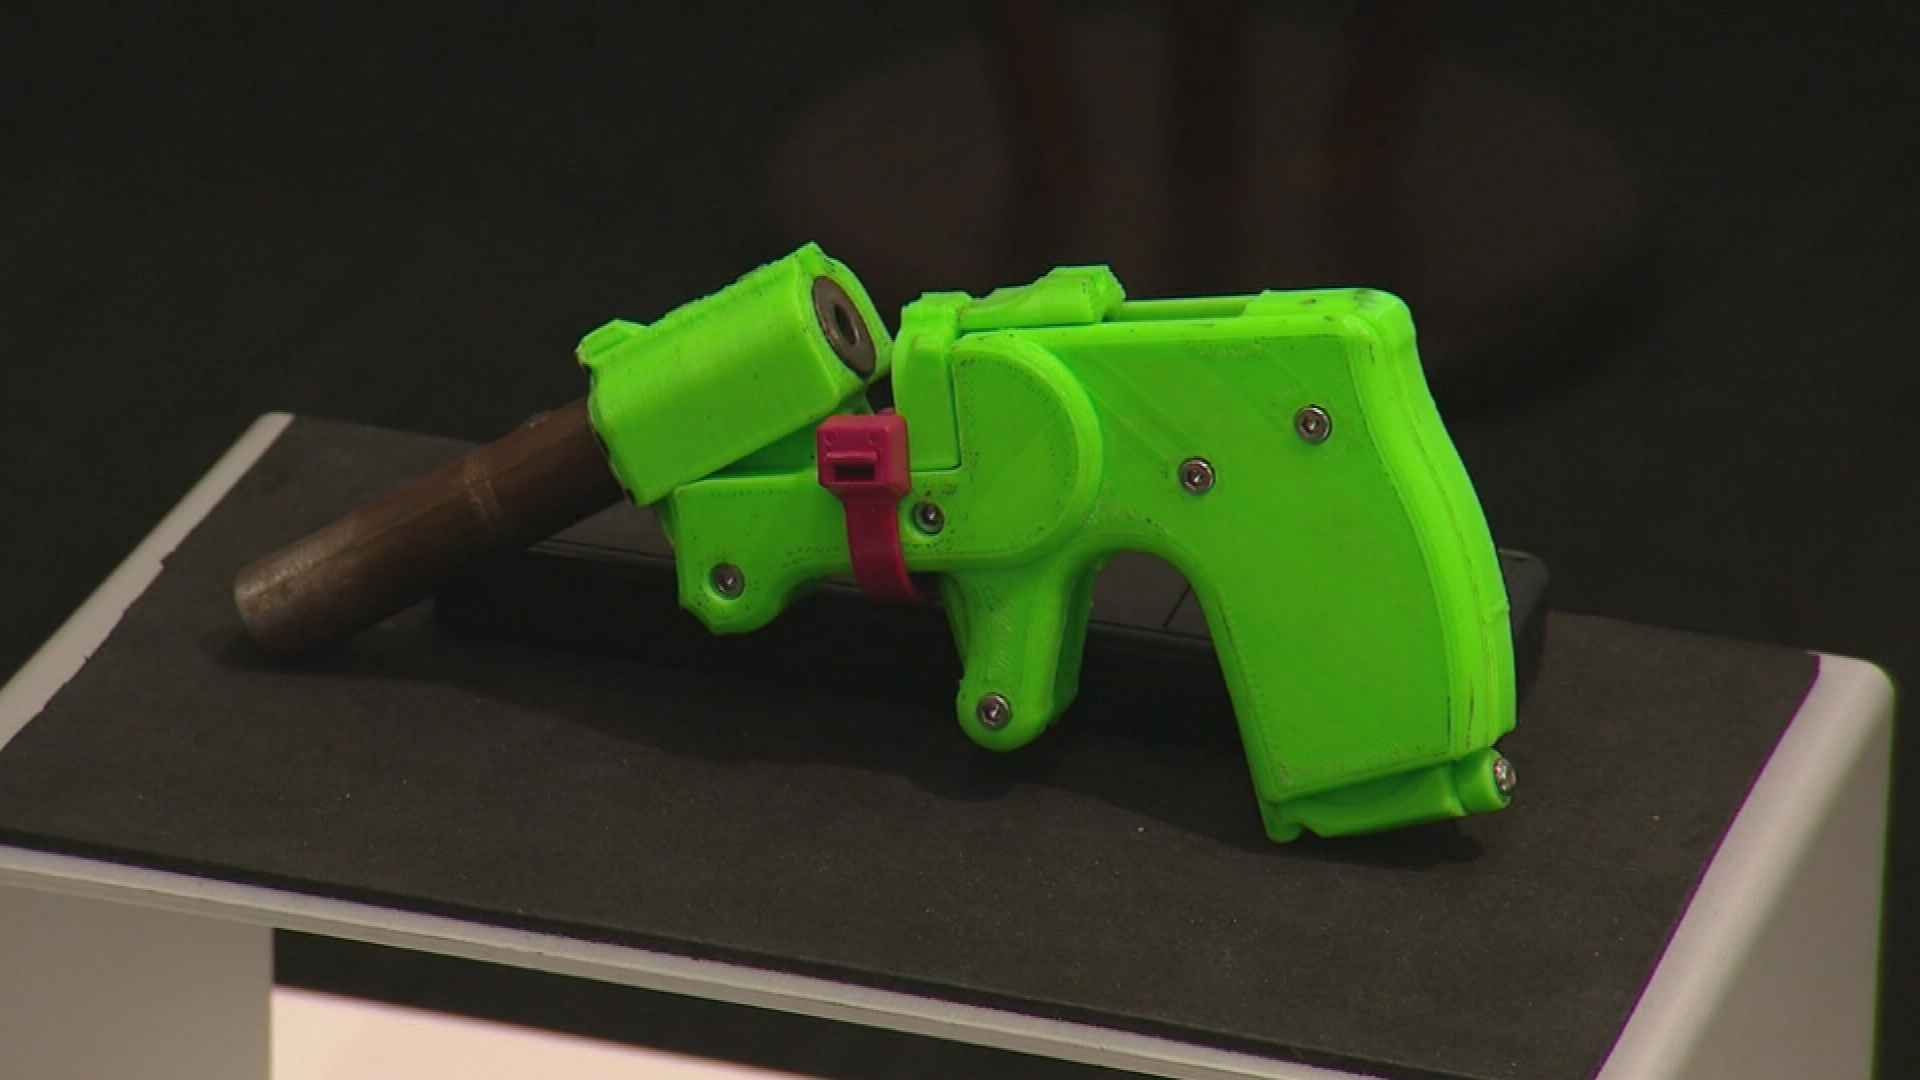 crackdown on 3d-printed guns in south australia